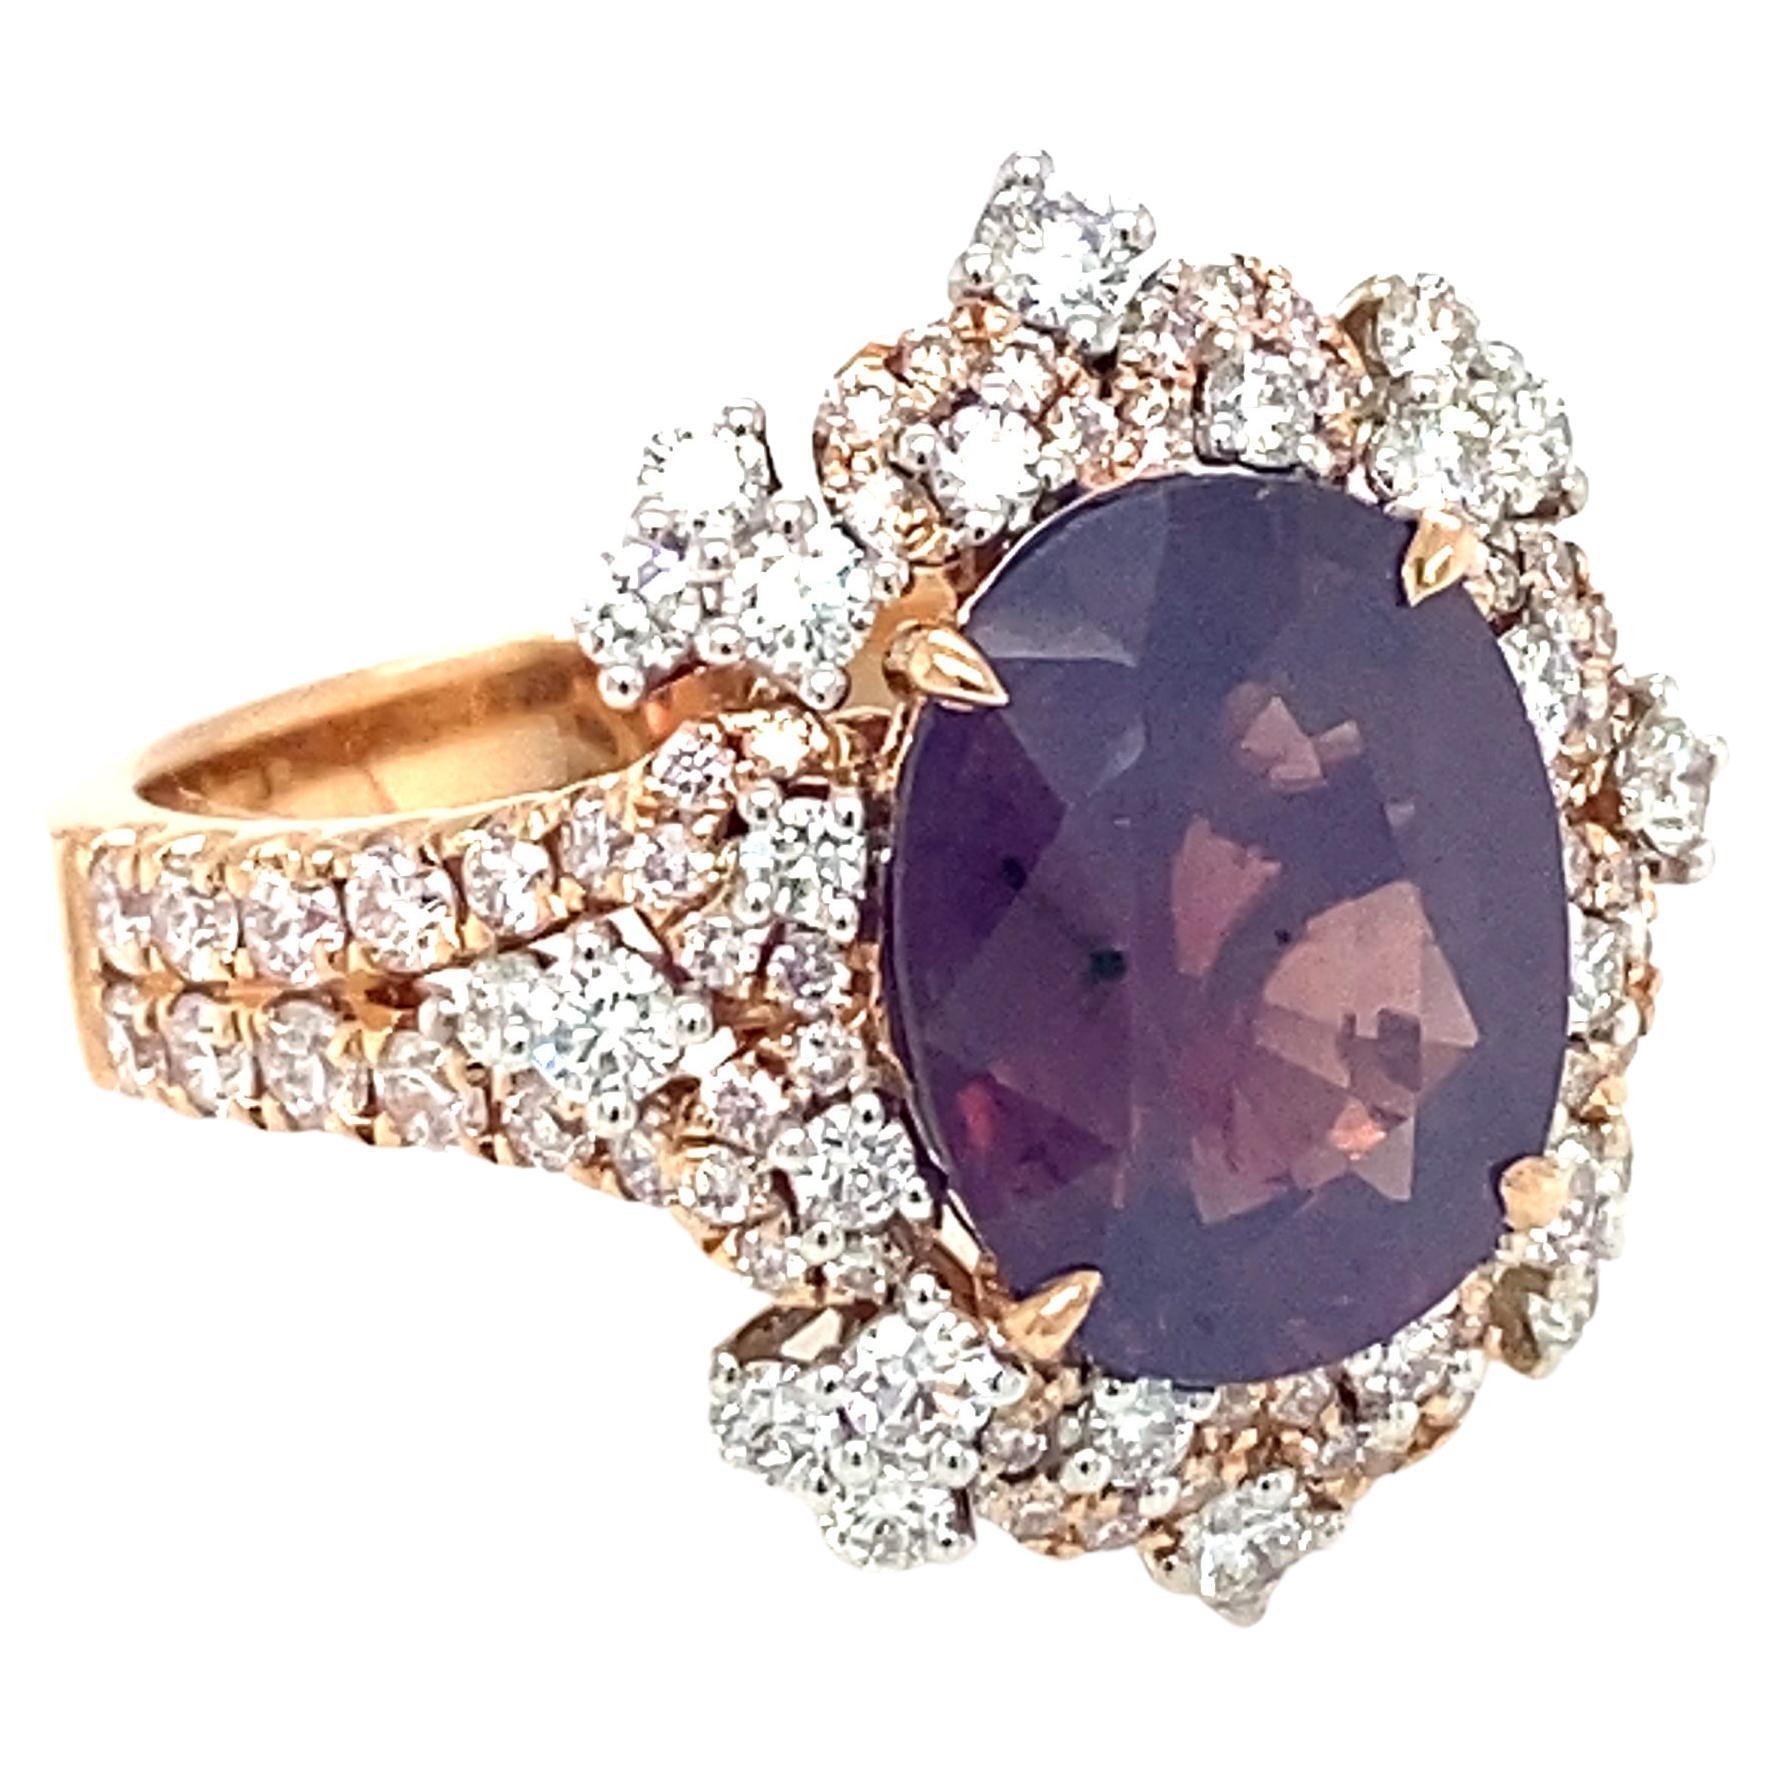 Modani 3 Carat Oval Kashmir Sapphire and Diamond Ring in 18 Karat Rose Gold